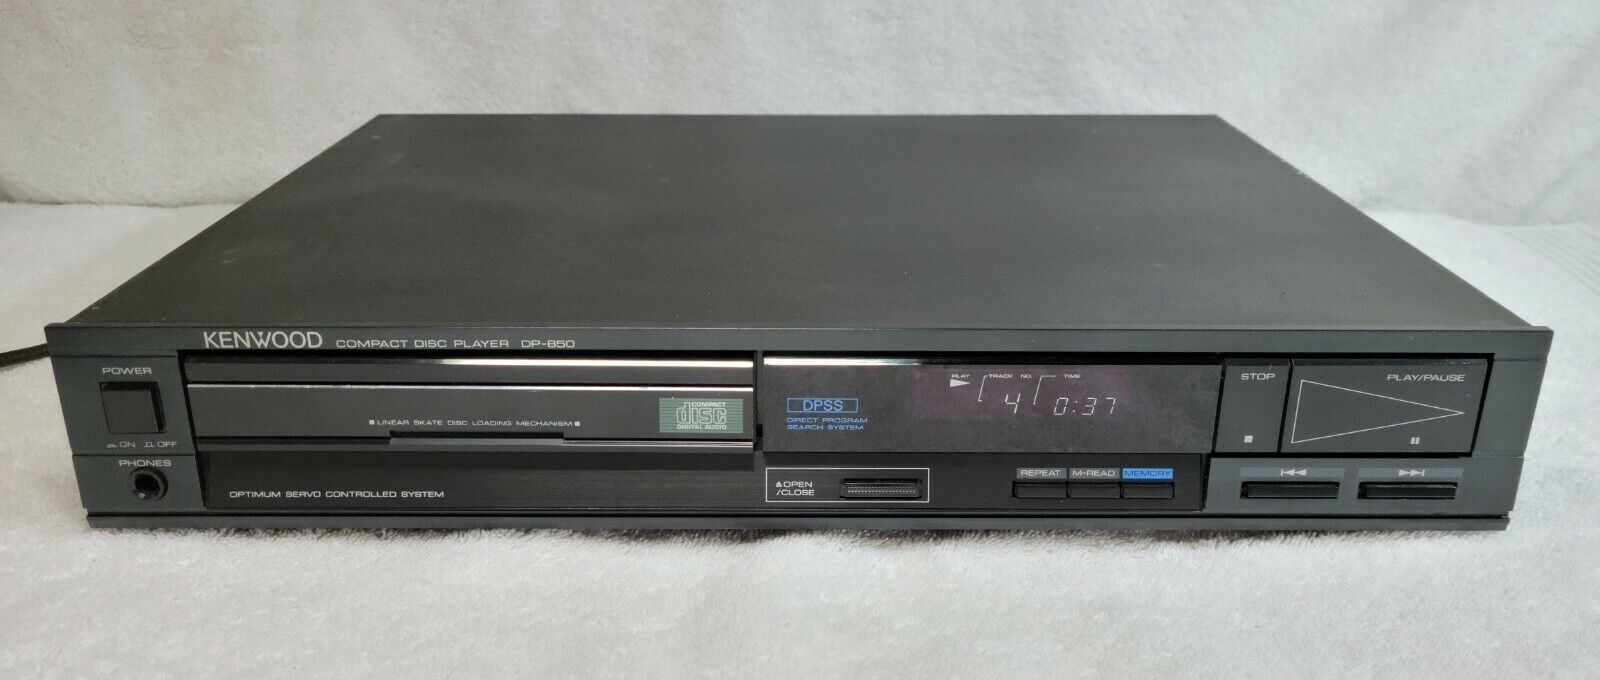 KENWOOD DP-850 Single CD Challenge the lowest price of Japan Player READ 1986 Under blast sales DESCRIPTION Vintage